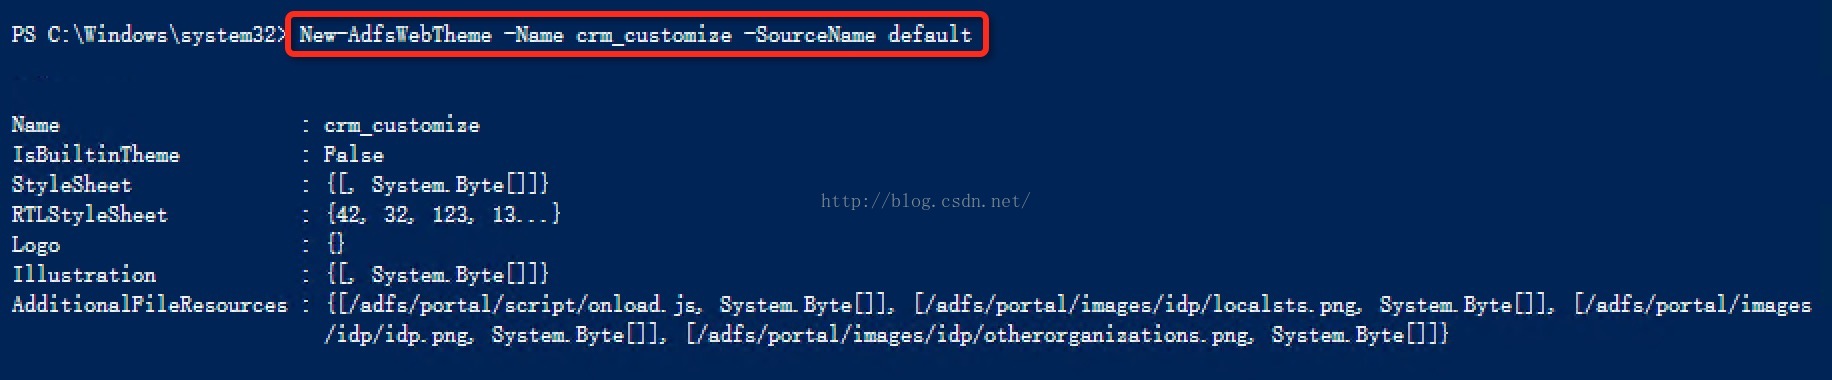 New-AdfsWebTheme -Name crm_customize -SourceName default